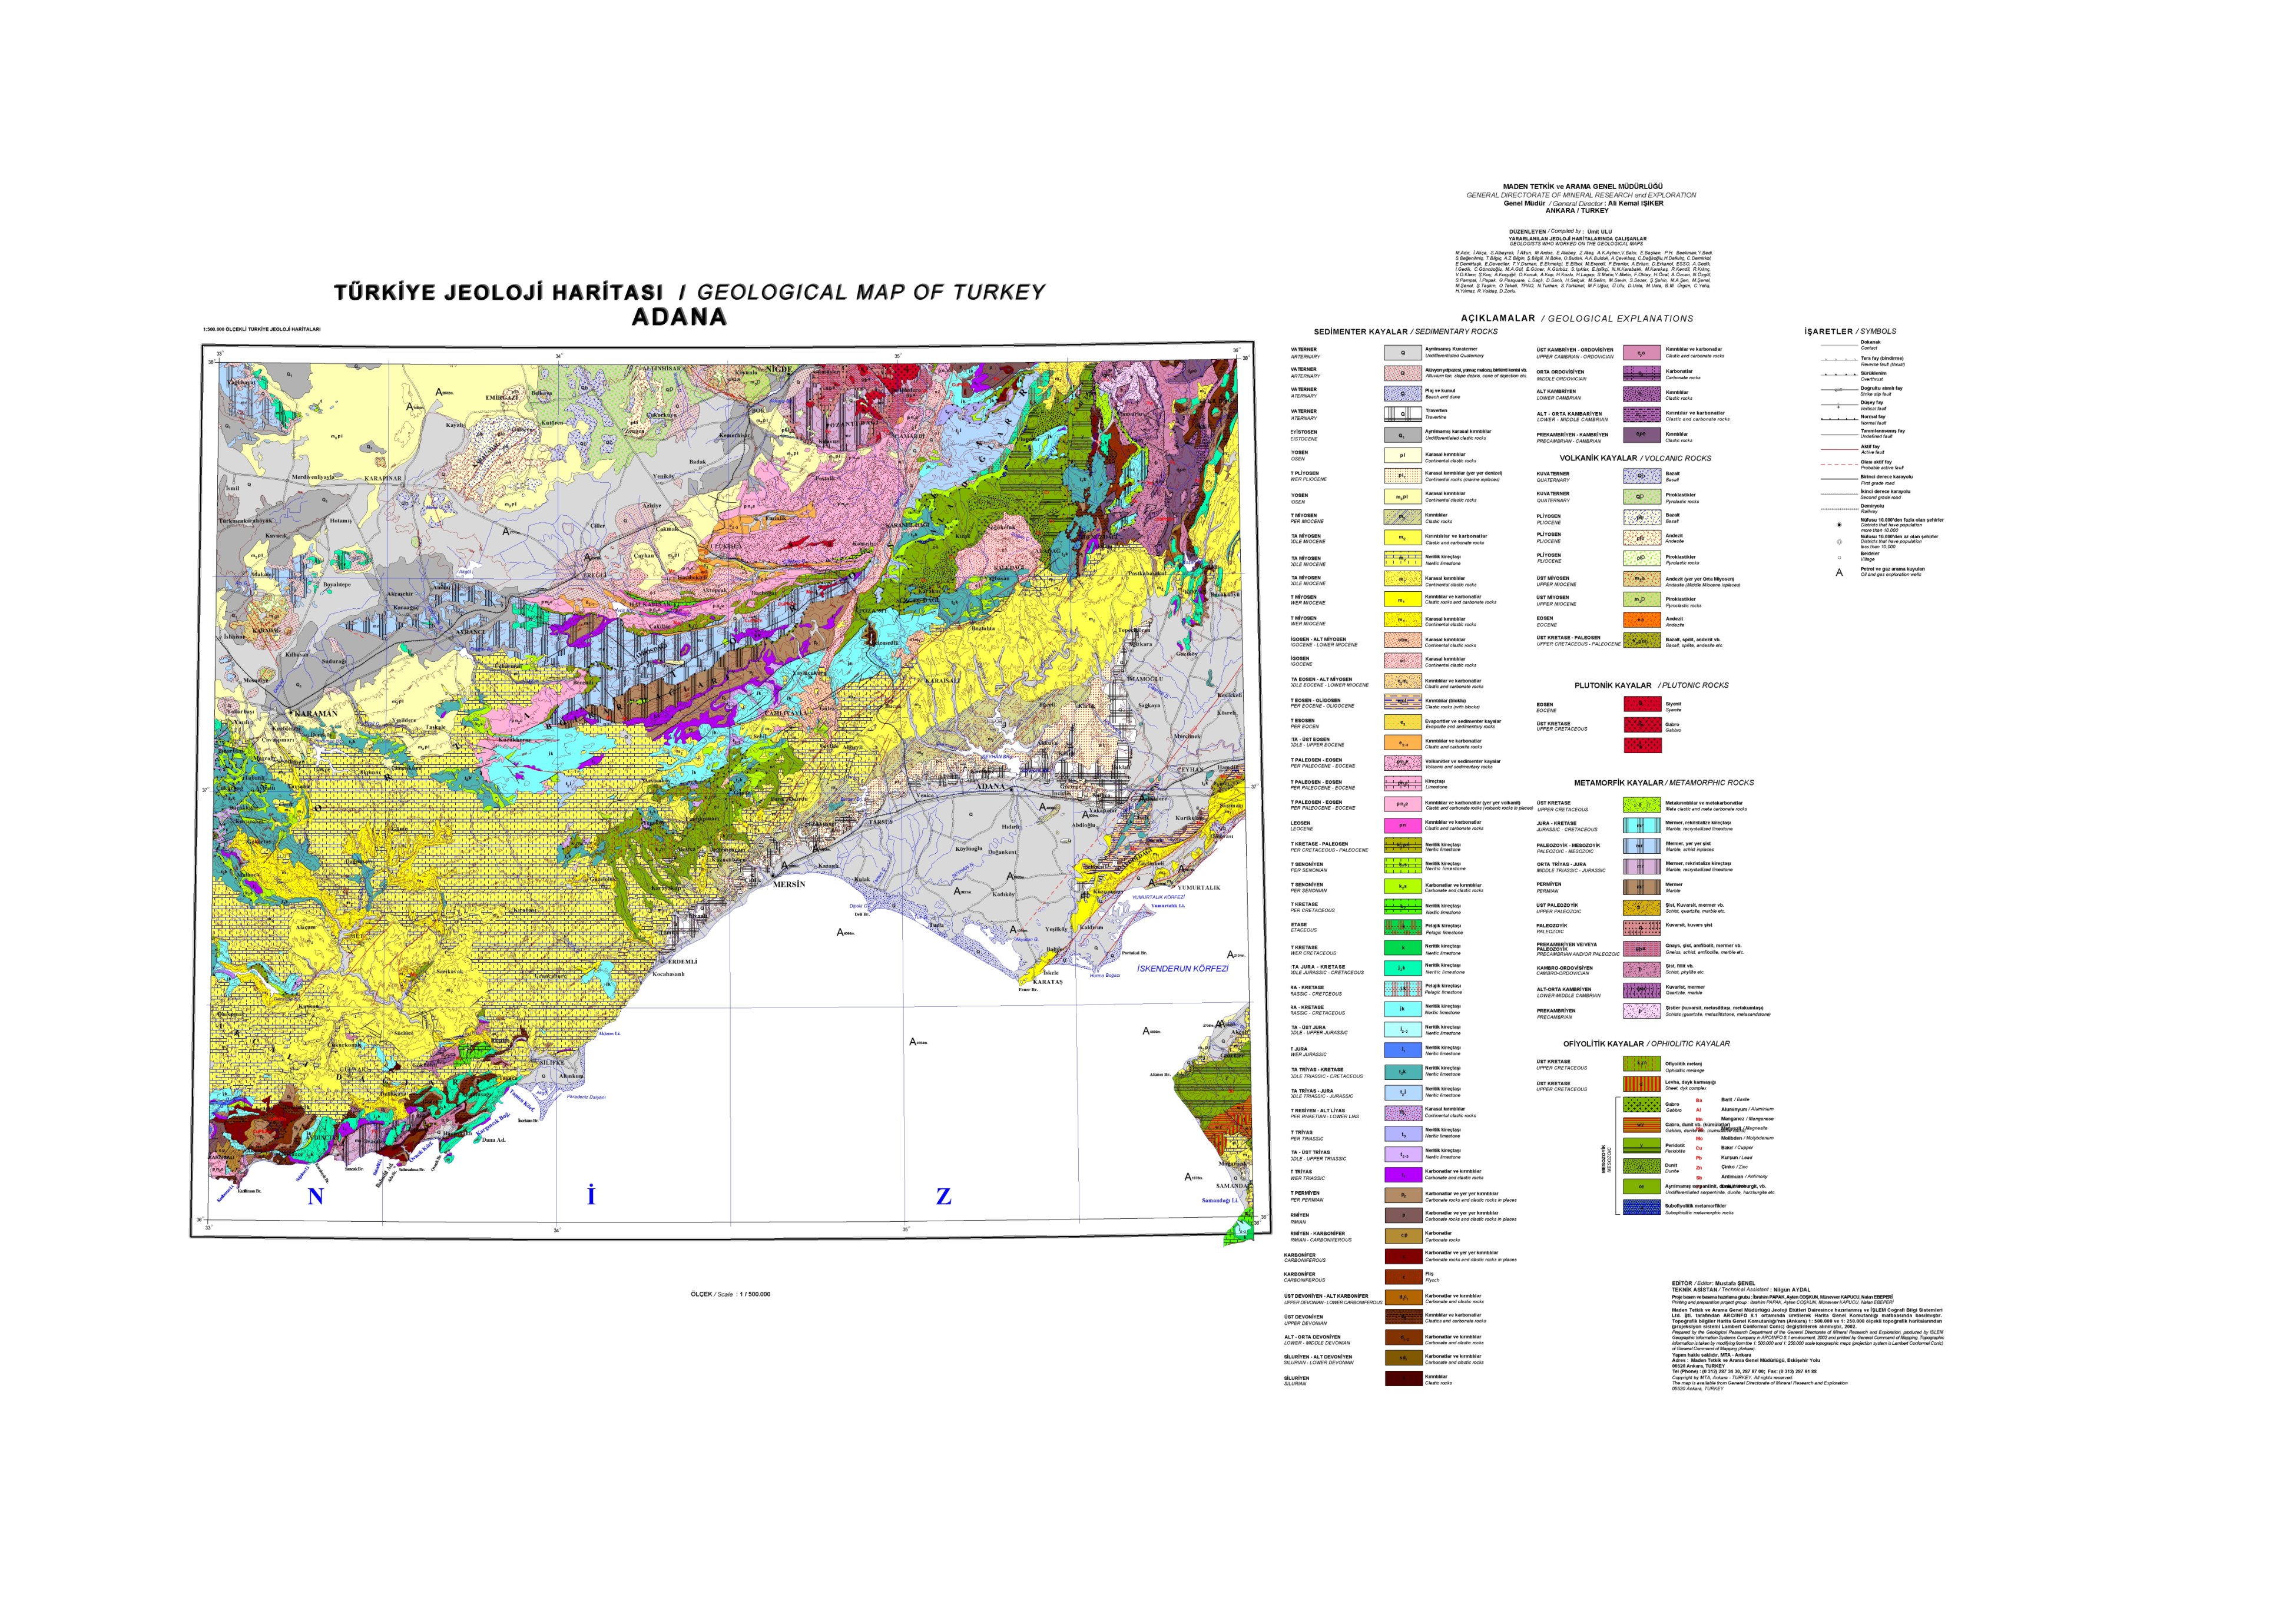 Macrostrat. Mapa geológico mundial * TYS Magazine